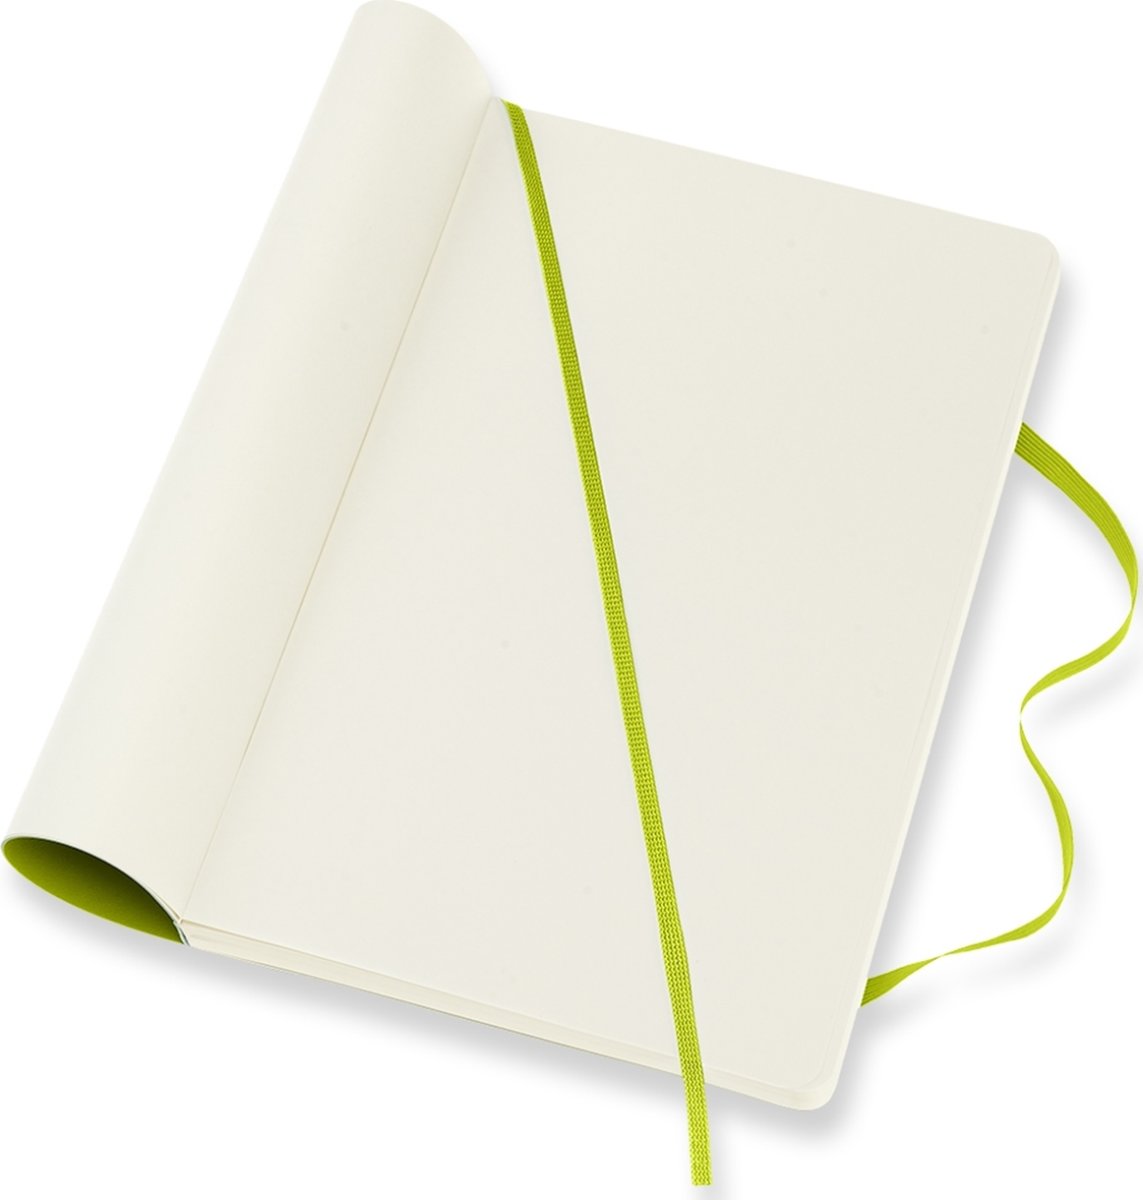 Notebook Moleskine Classic L Ljusgrön